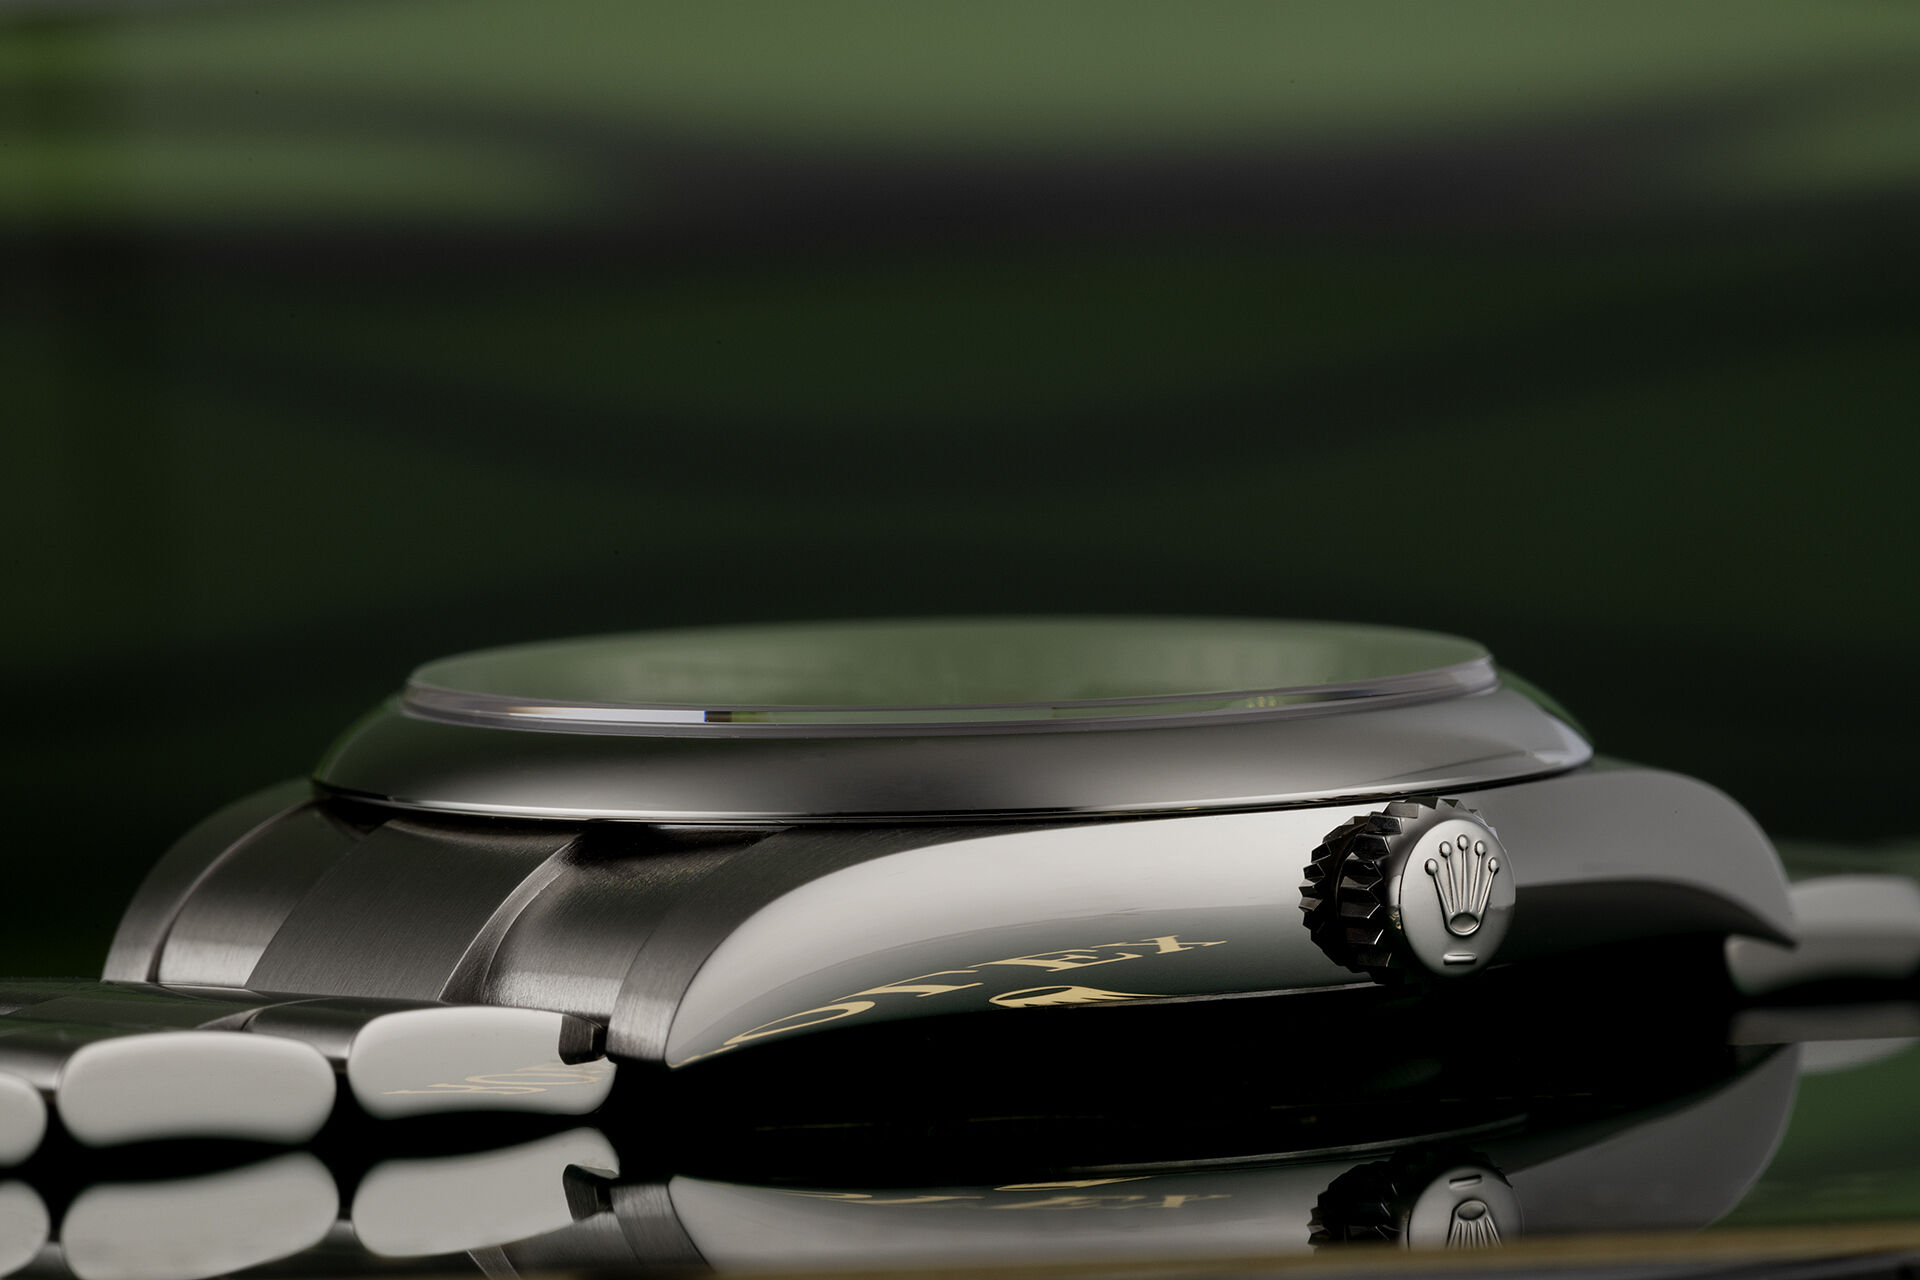 ref 124300 | Rolex Warranty to 2027 | Rolex Oyster Perpetual